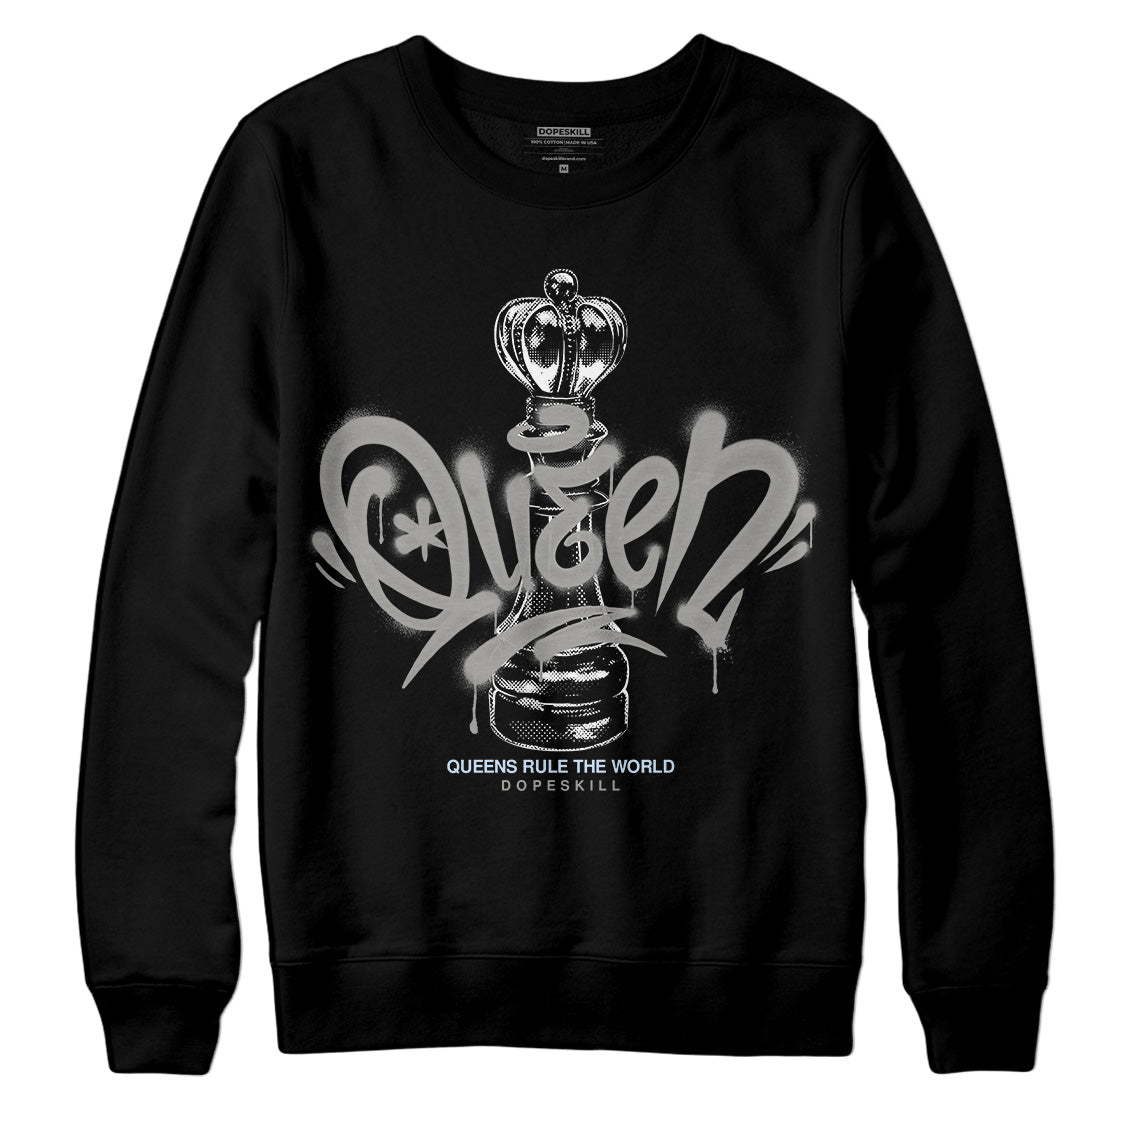 Jordan 6 Retro Cool Grey DopeSkill Sweatshirt Queen Chess Graphic Streetwear - Black